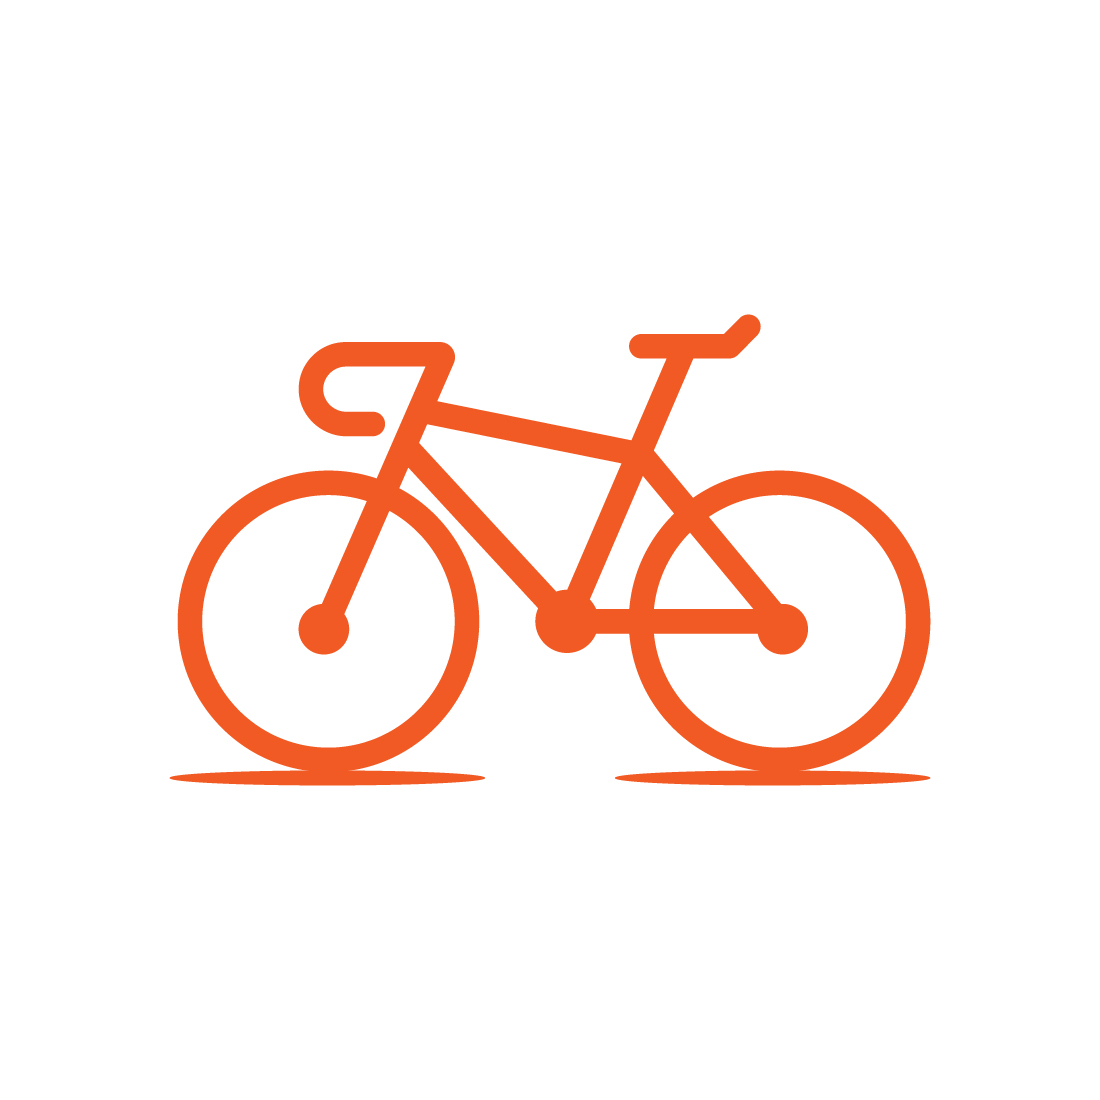 Cycle Icon Design Orange cover image.